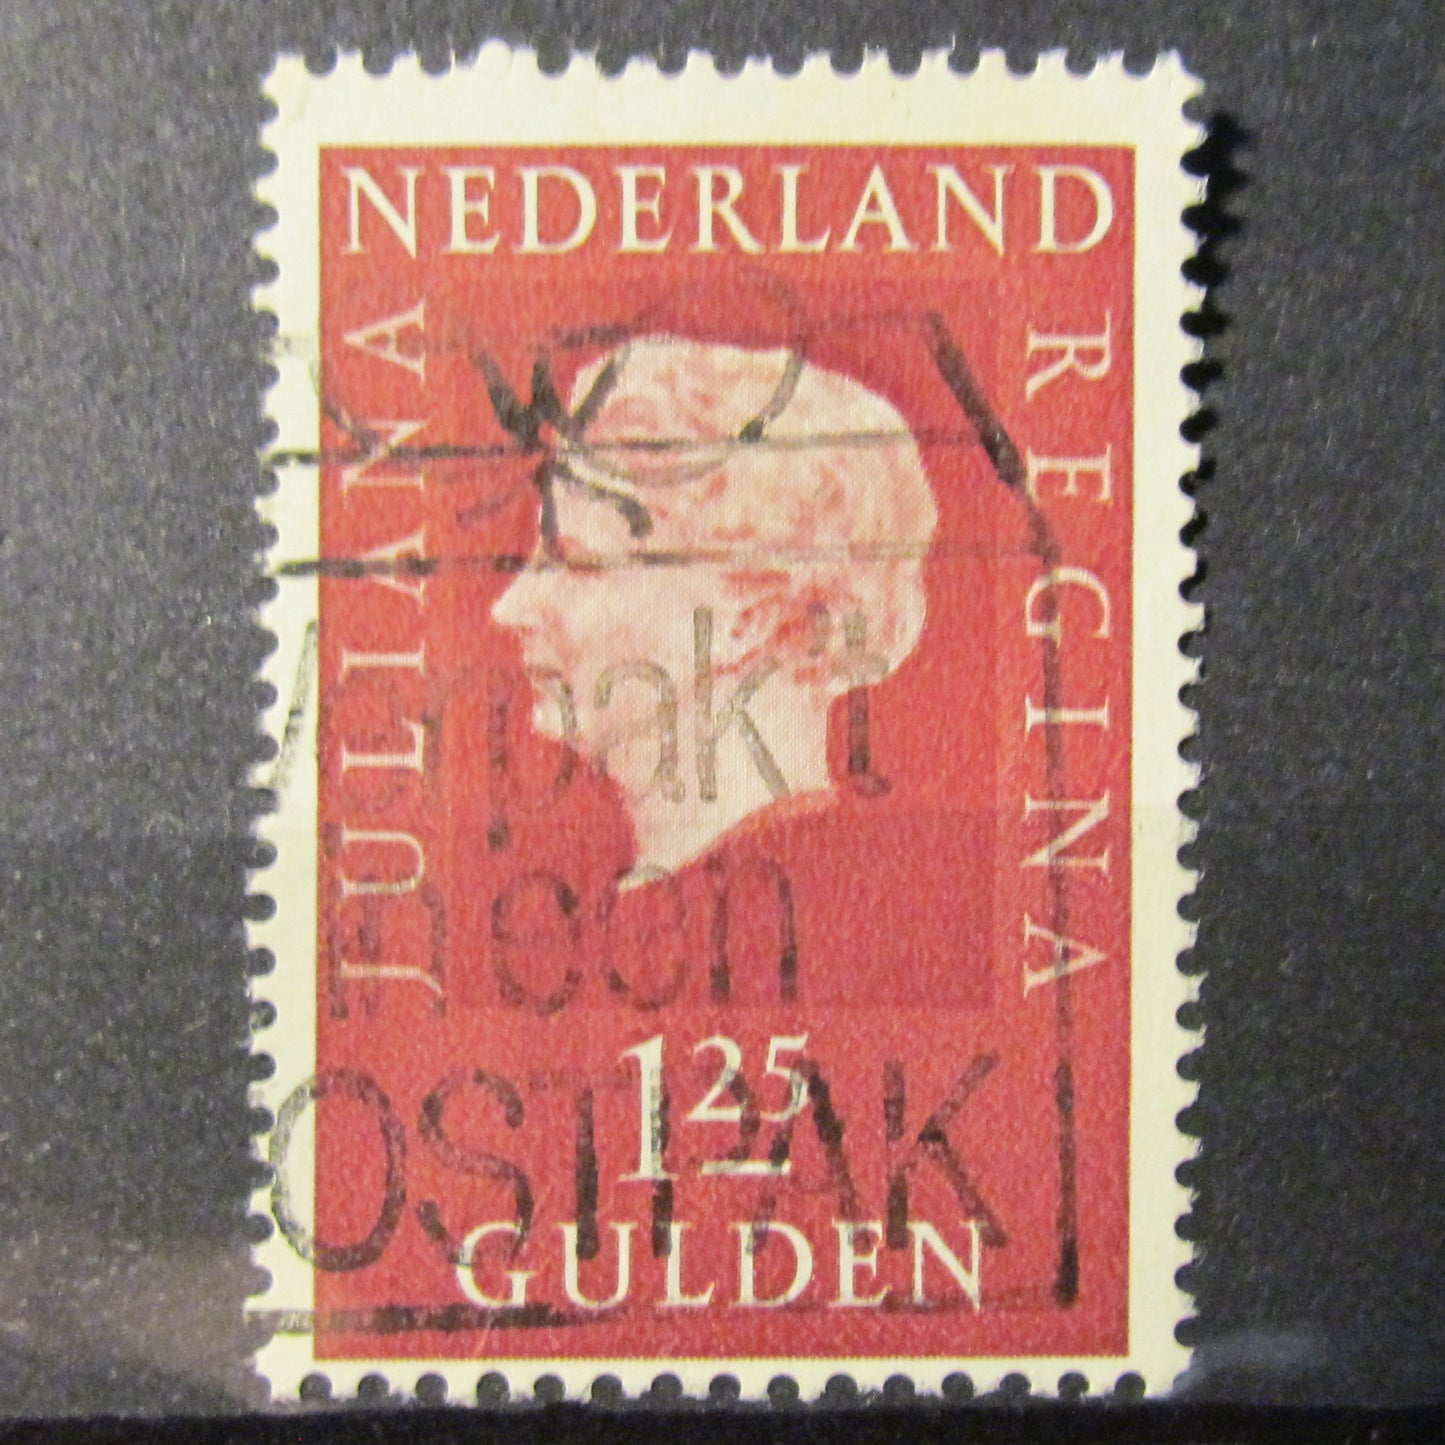 Dutch Netherlands 1969 1.25 Gulden Queen Juliana Large Format Stamp Cancelled